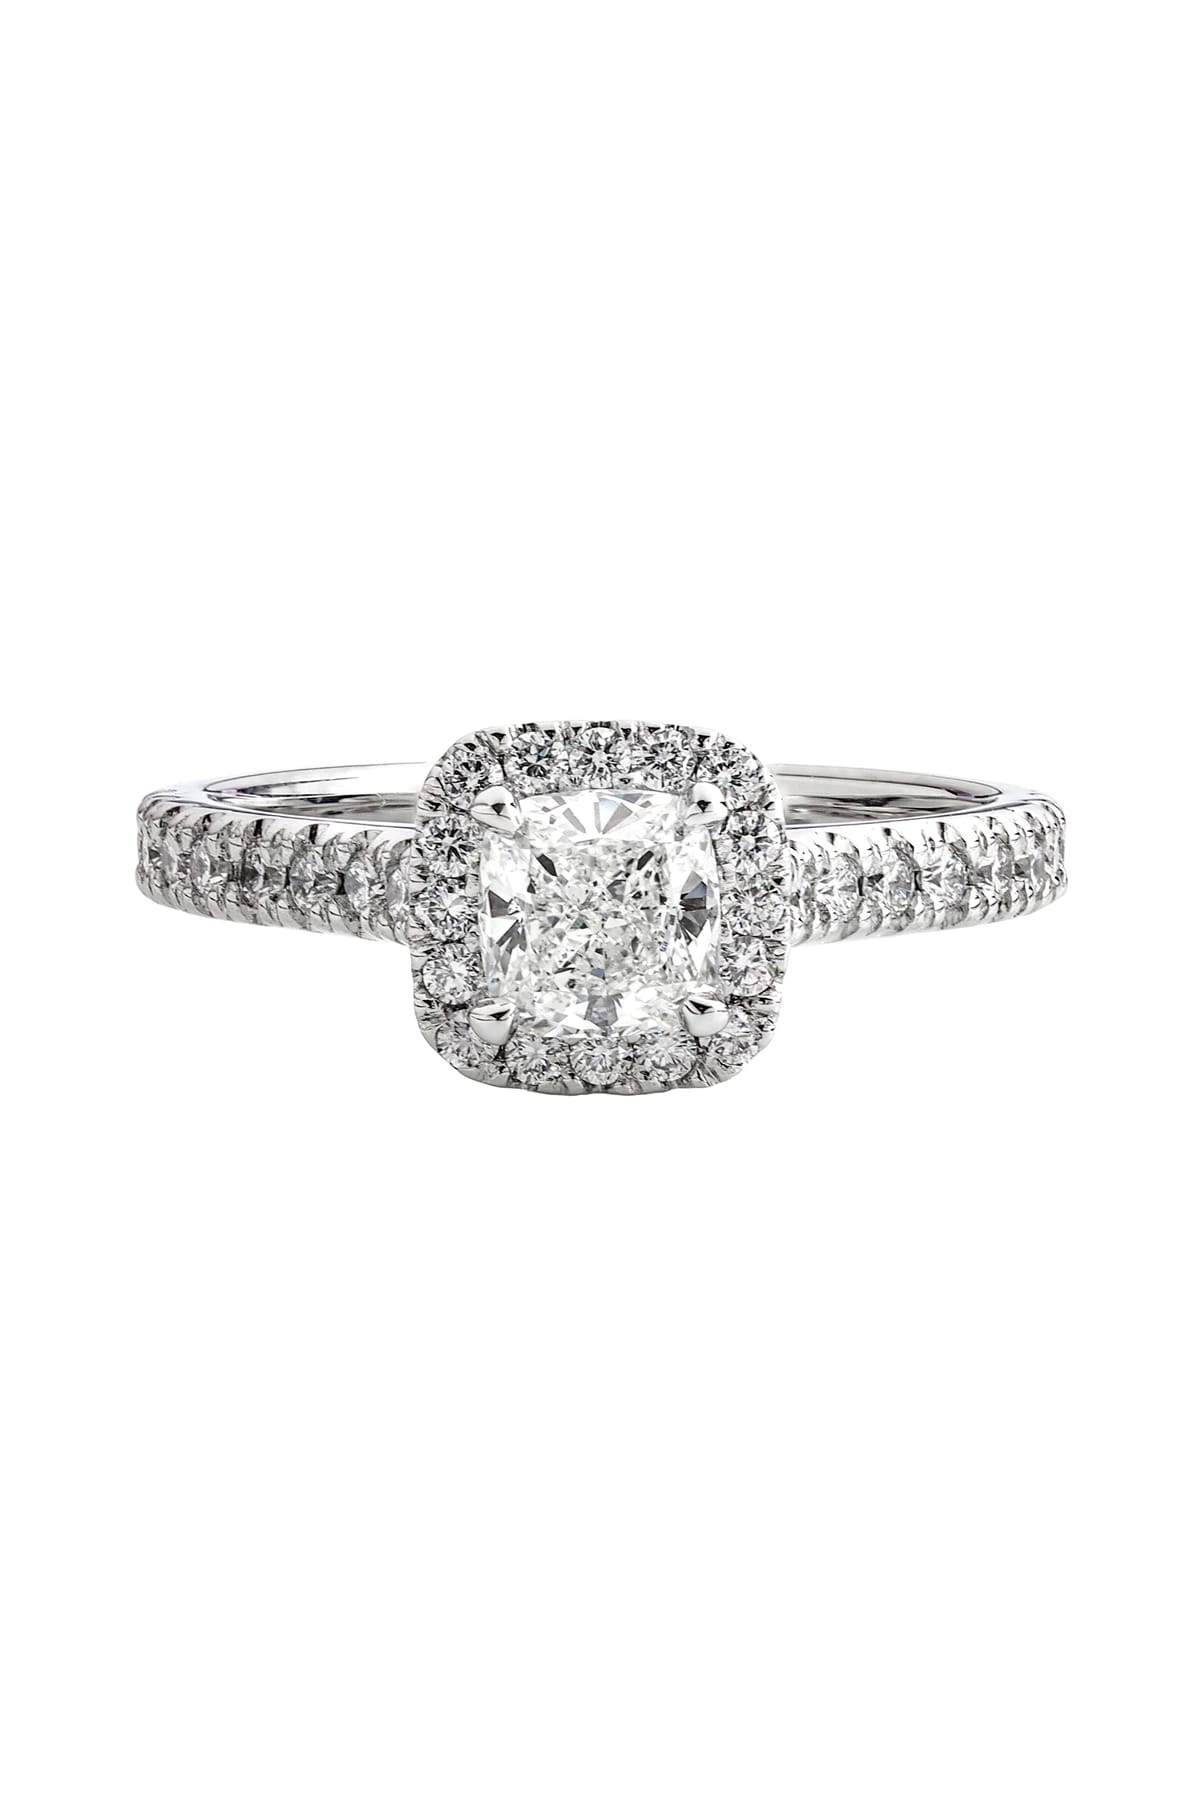 18 Carat Gold Cushion Halo Diamond Engagement Ring available at LeGassick Diamonds and Jewellery Gold Coast, Australia